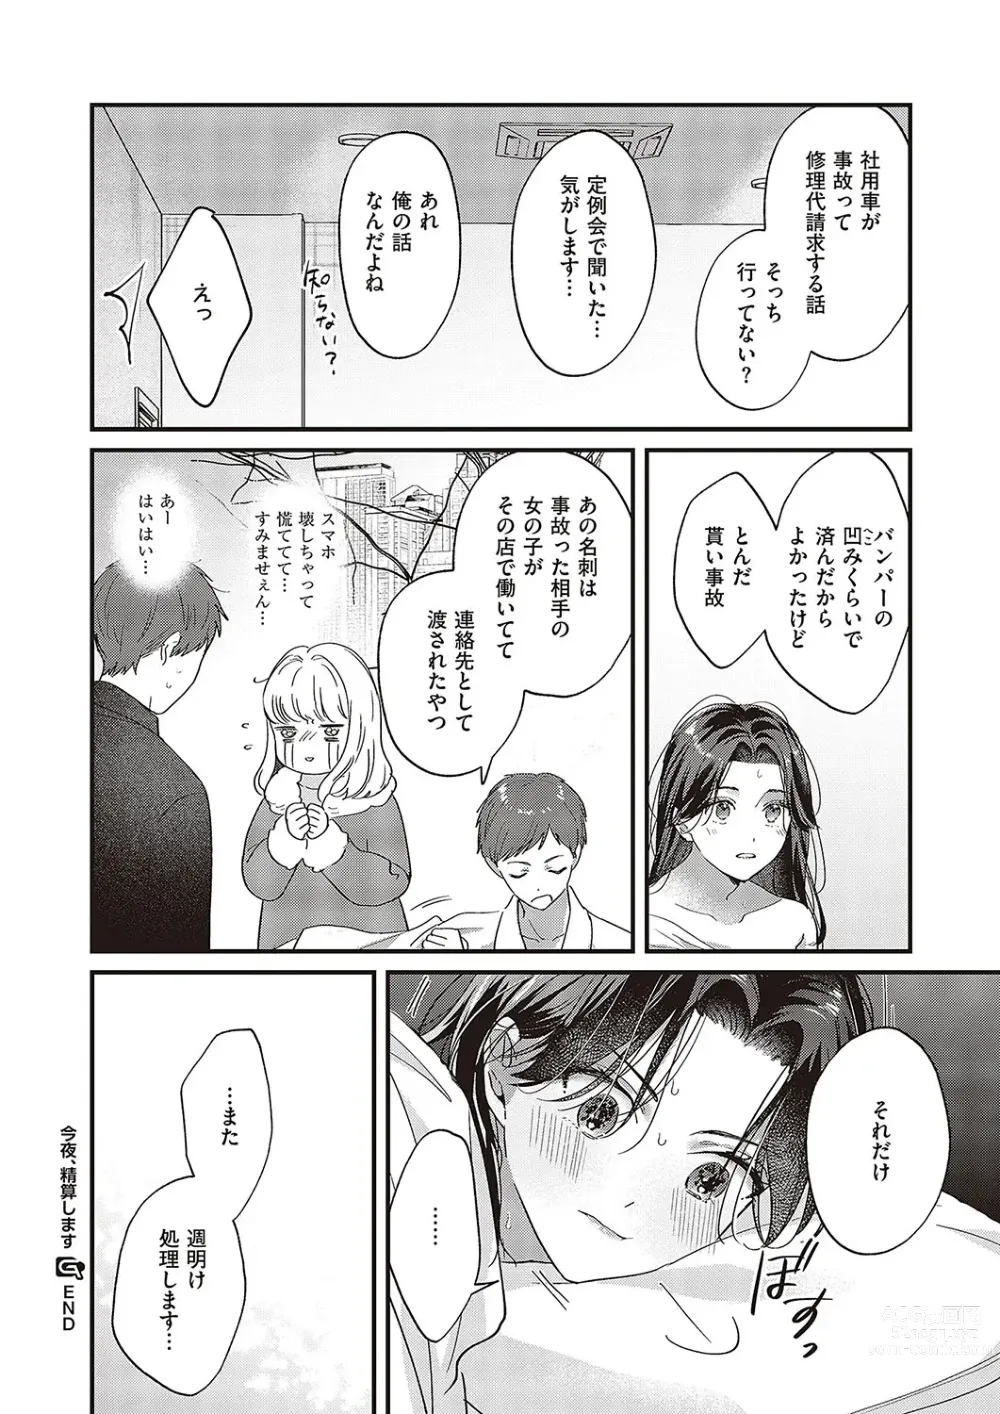 Page 661 of manga Comic G-Es Vol. 5